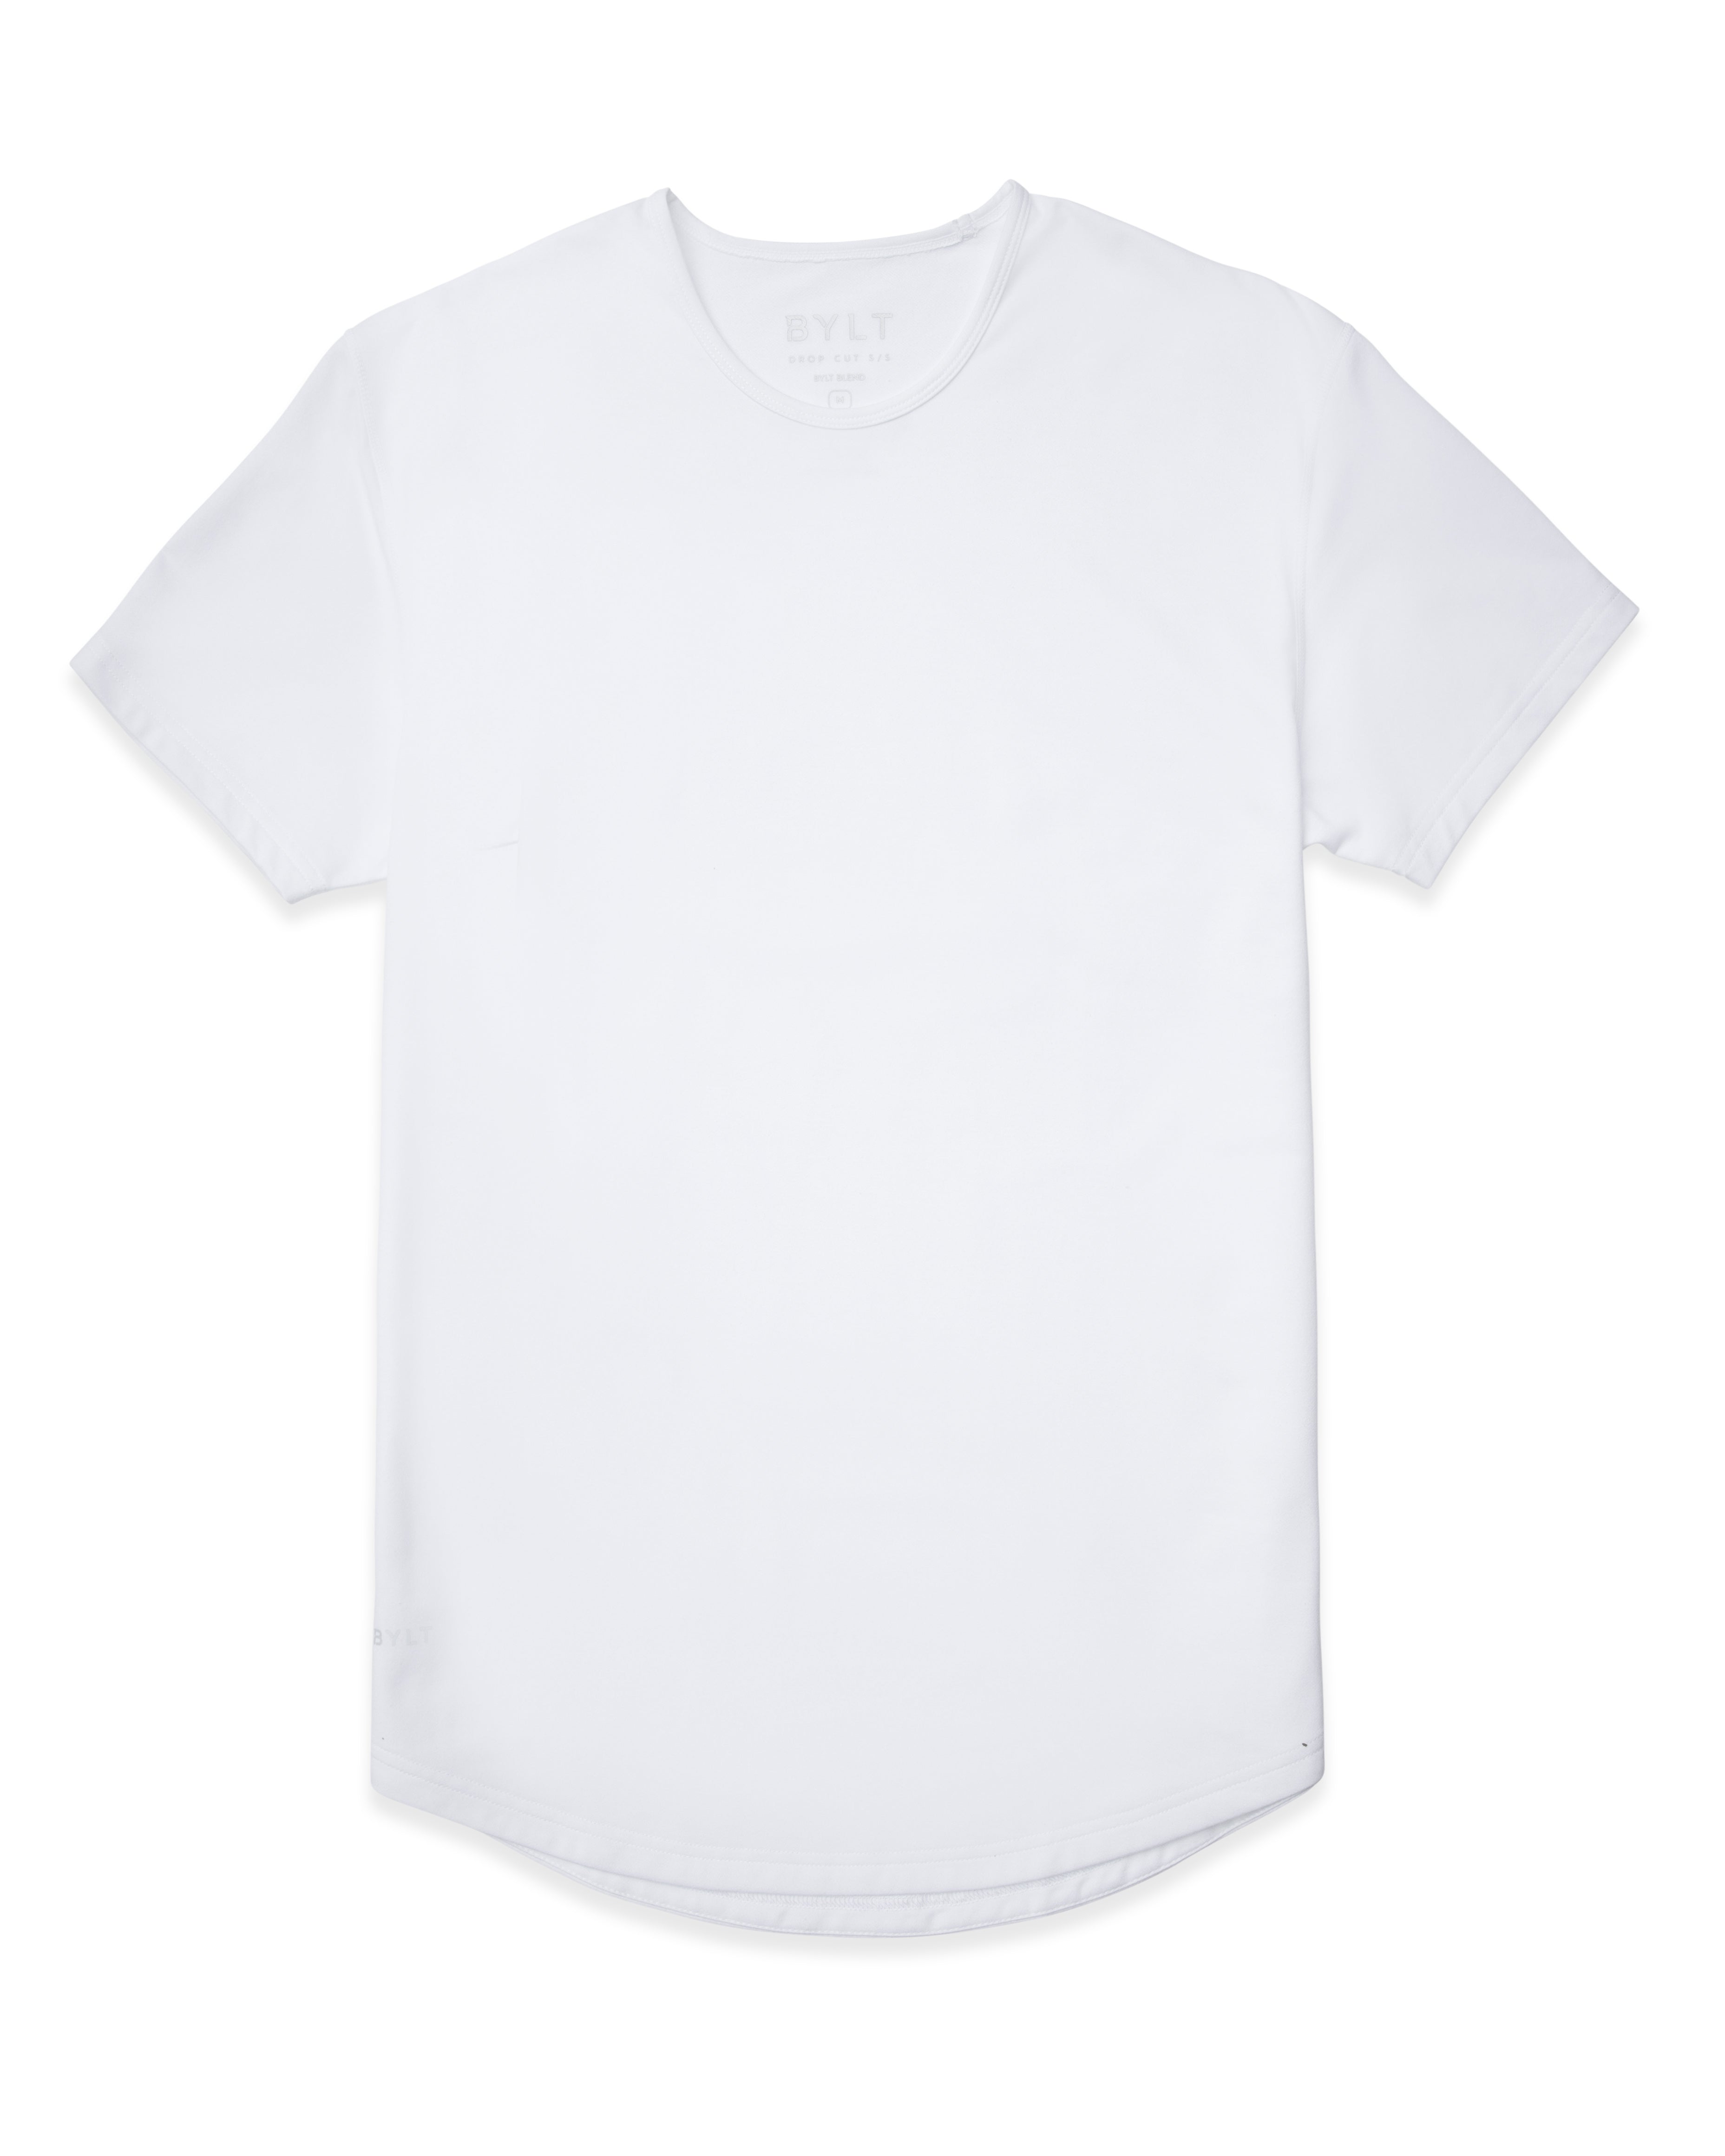 Drop-Cut Shirt: BYLT Signature | BYLT Basics™ - Premium Basics